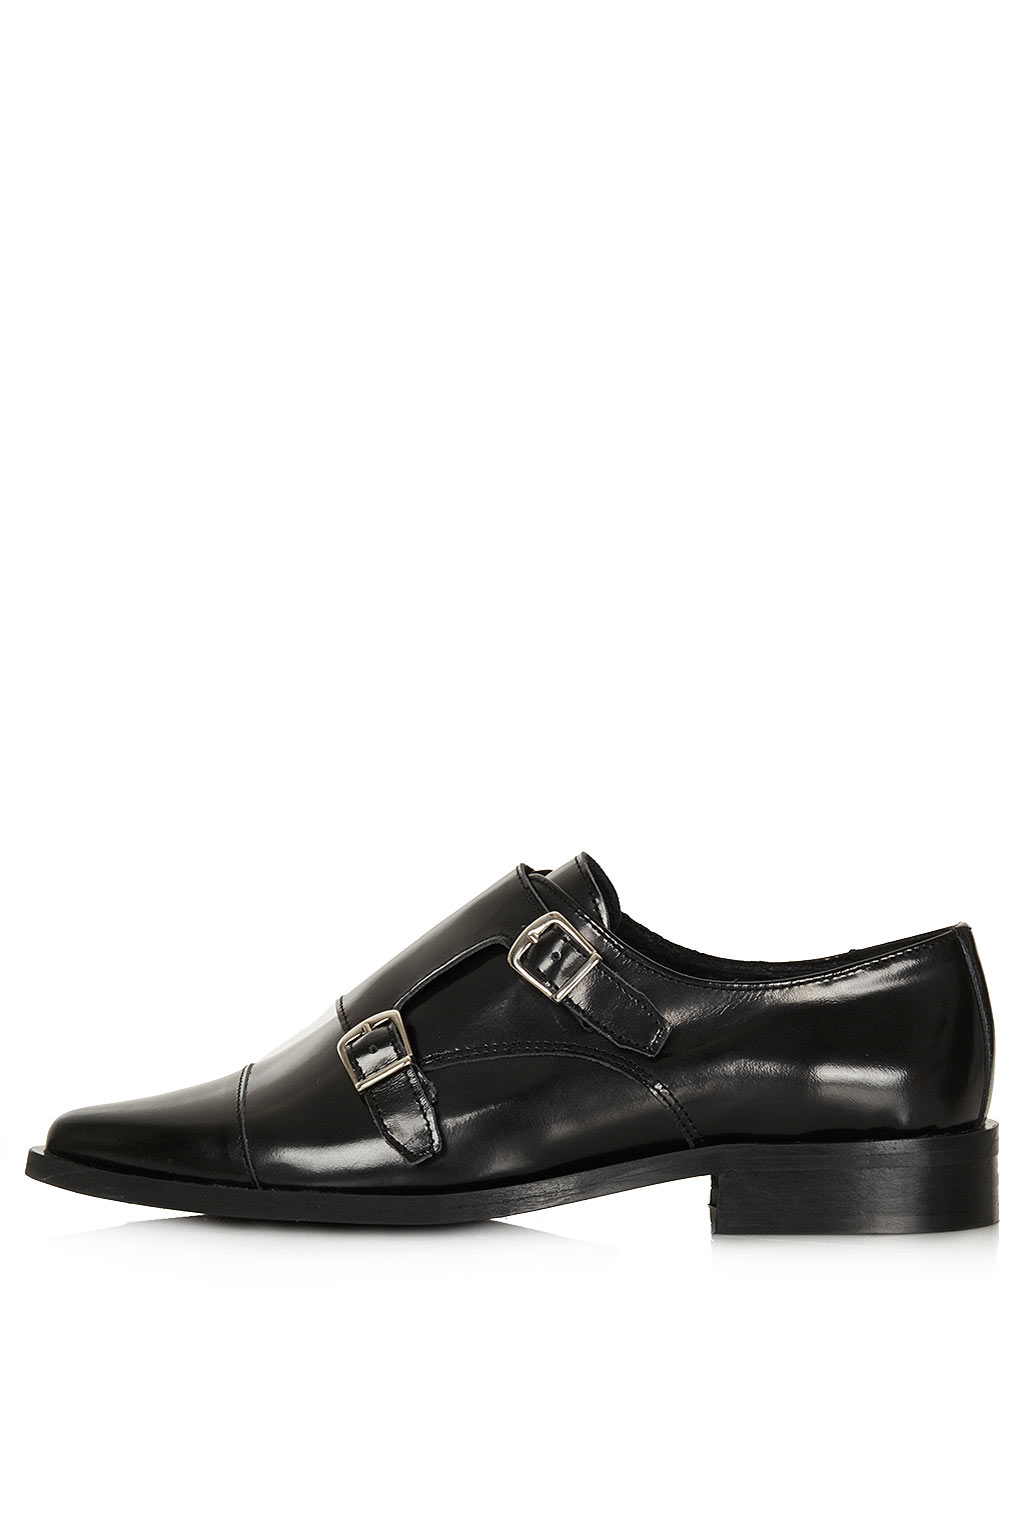 Lyst - Topshop Perpignan Monk Shoes in Black